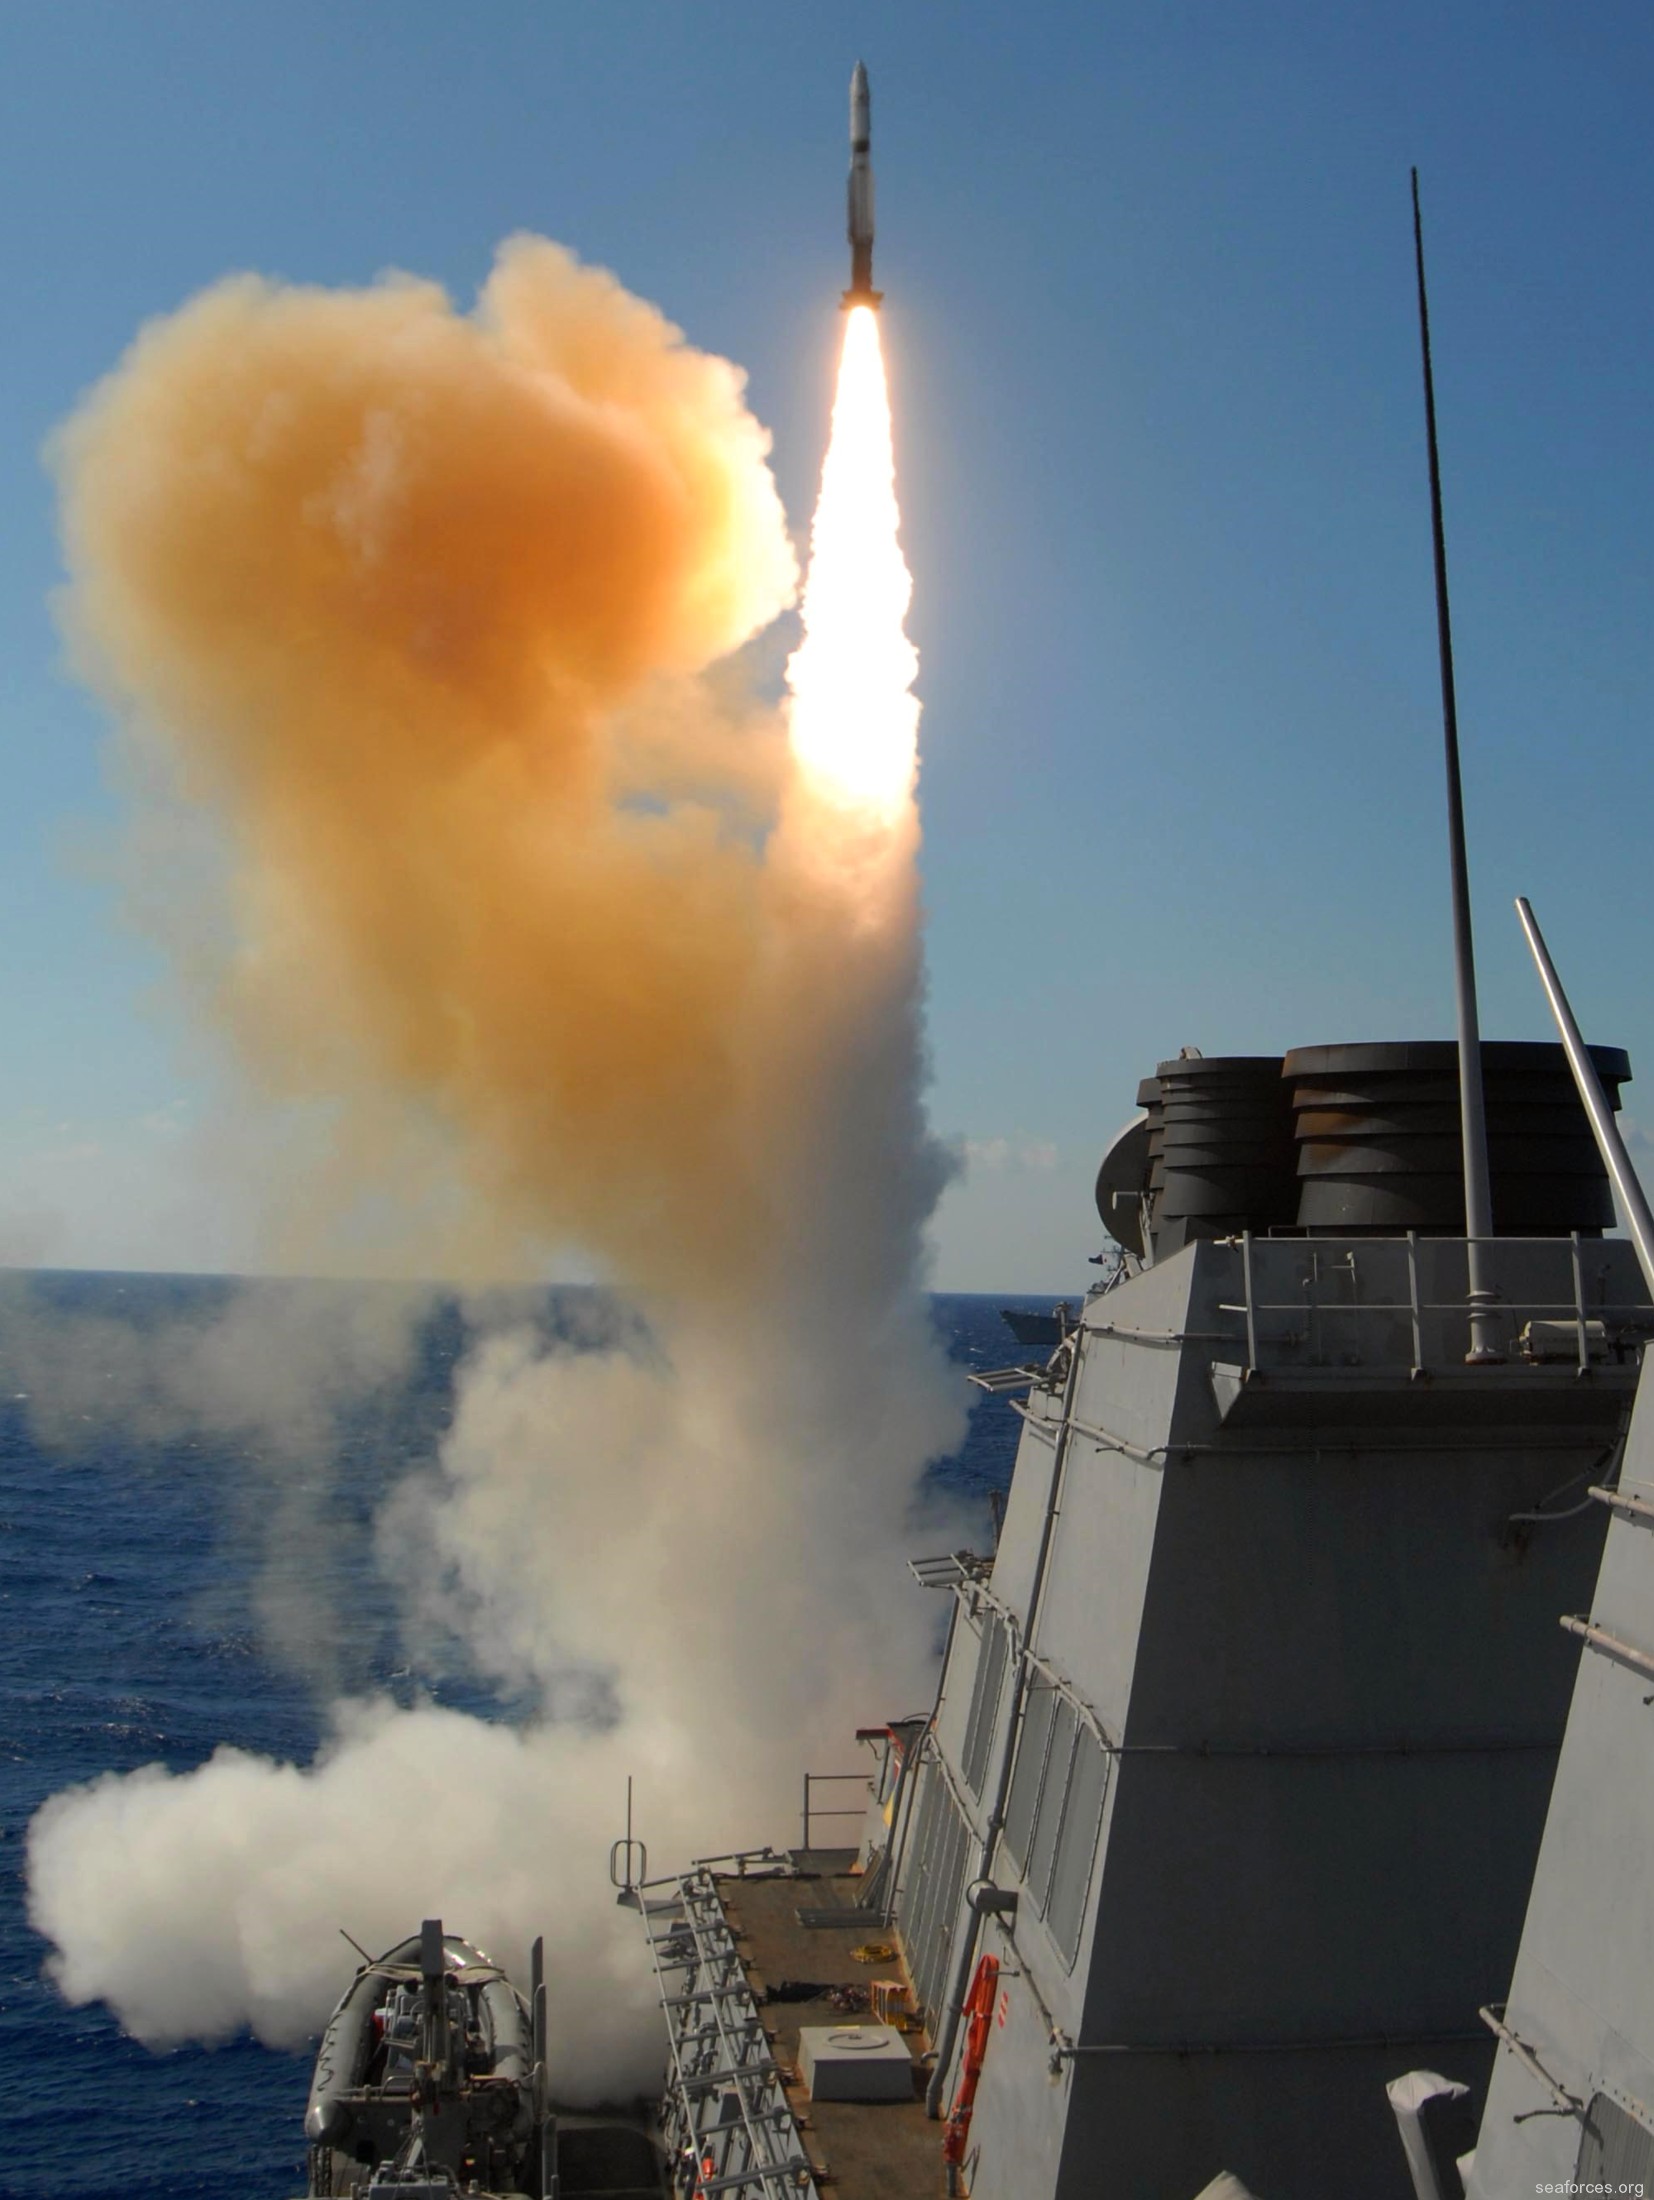 ddg-55 uss stout guided missile destroyer us navy 85 rim-66 standard missile sm-2mr launch